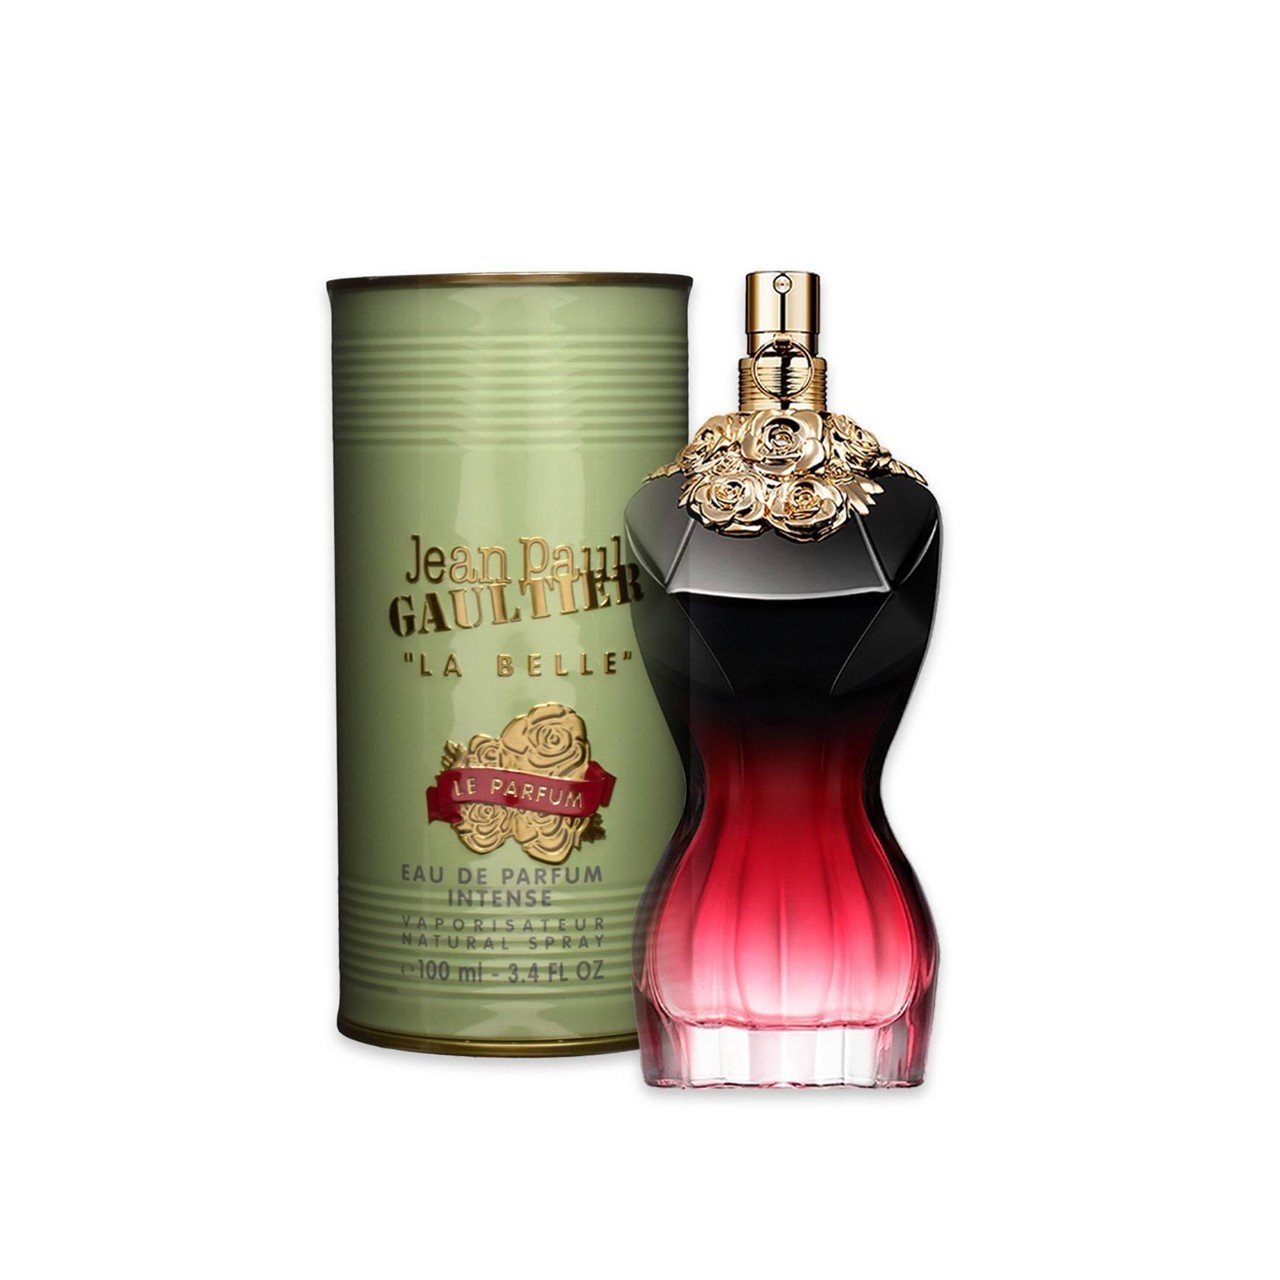 https://static.beautytocare.com/media/catalog/product/j/e/jean-paul-gaultier-la-belle-eau-de-parfum-intense-100ml.jpg